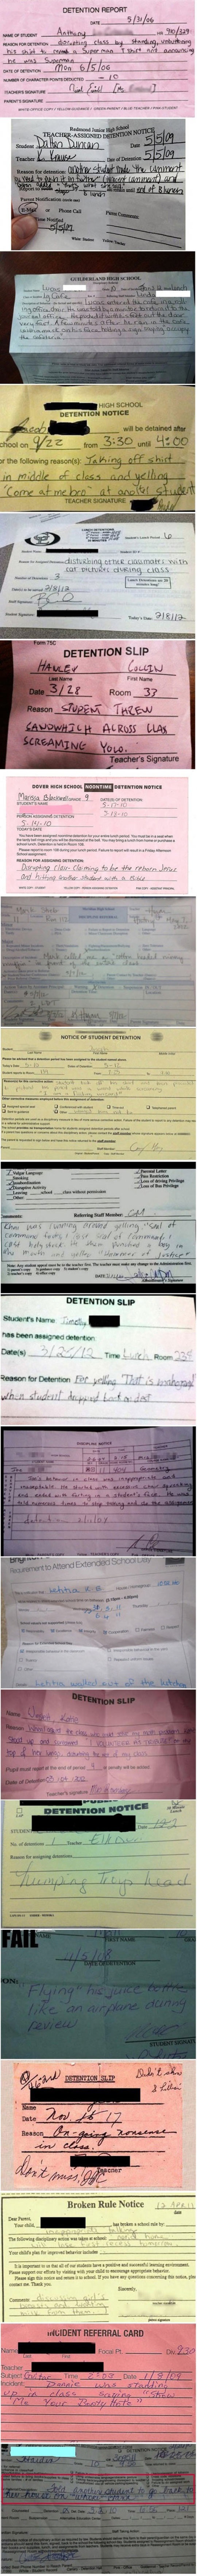 cool-detention-slips-students